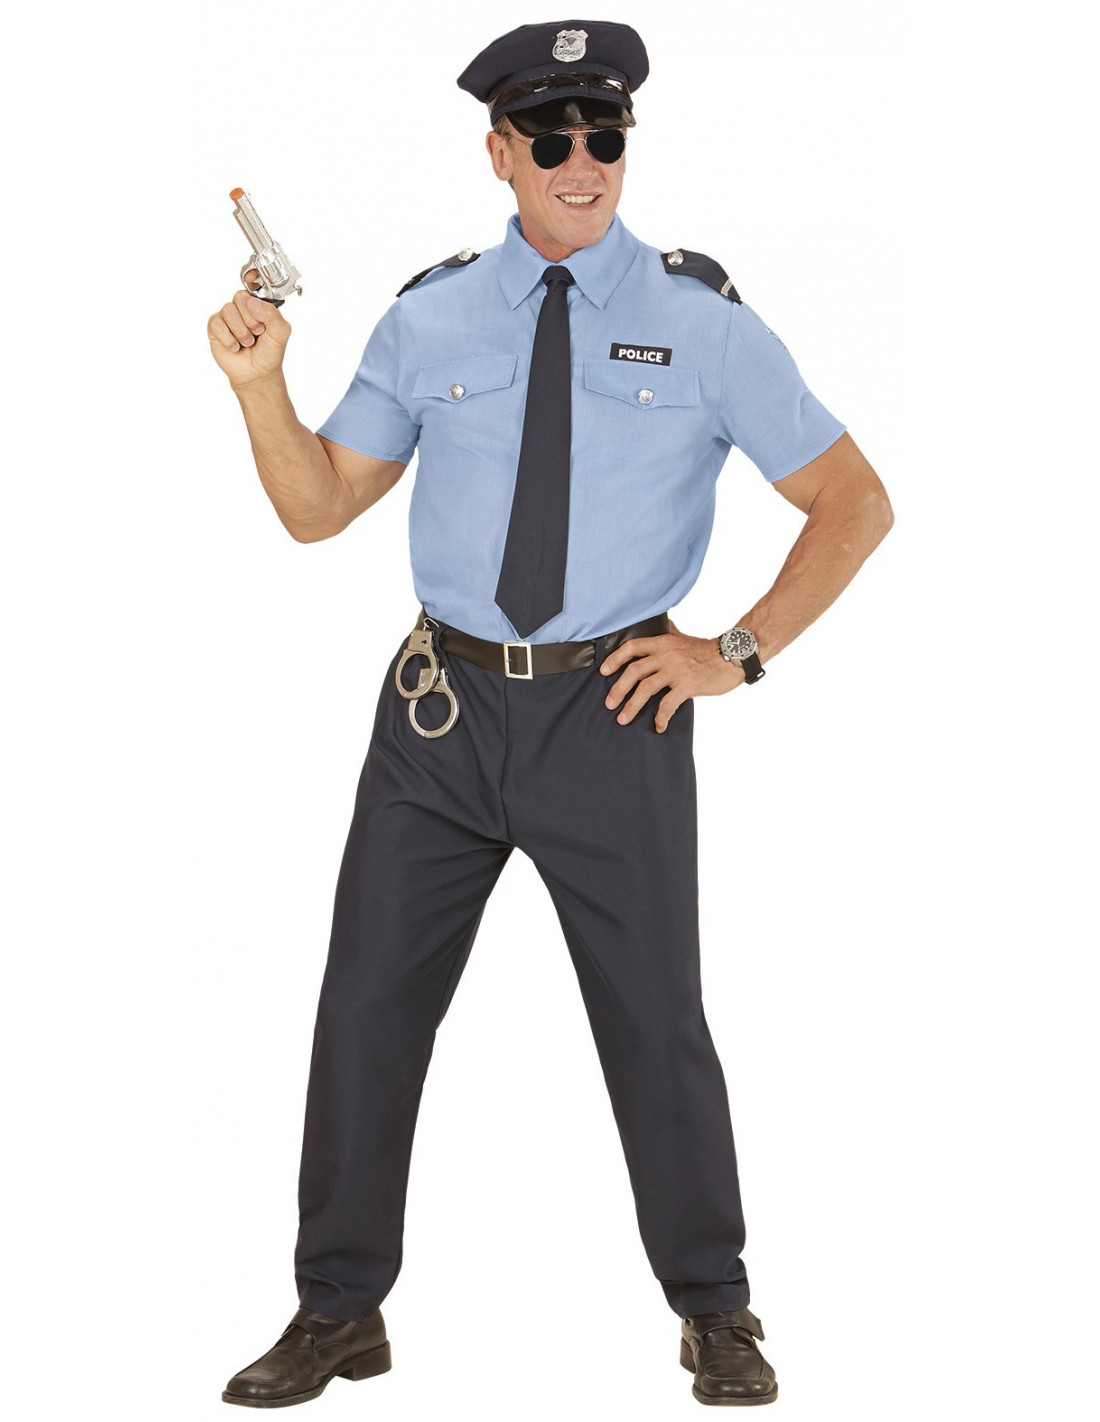 Disfraz de Policía Nacional para adulta